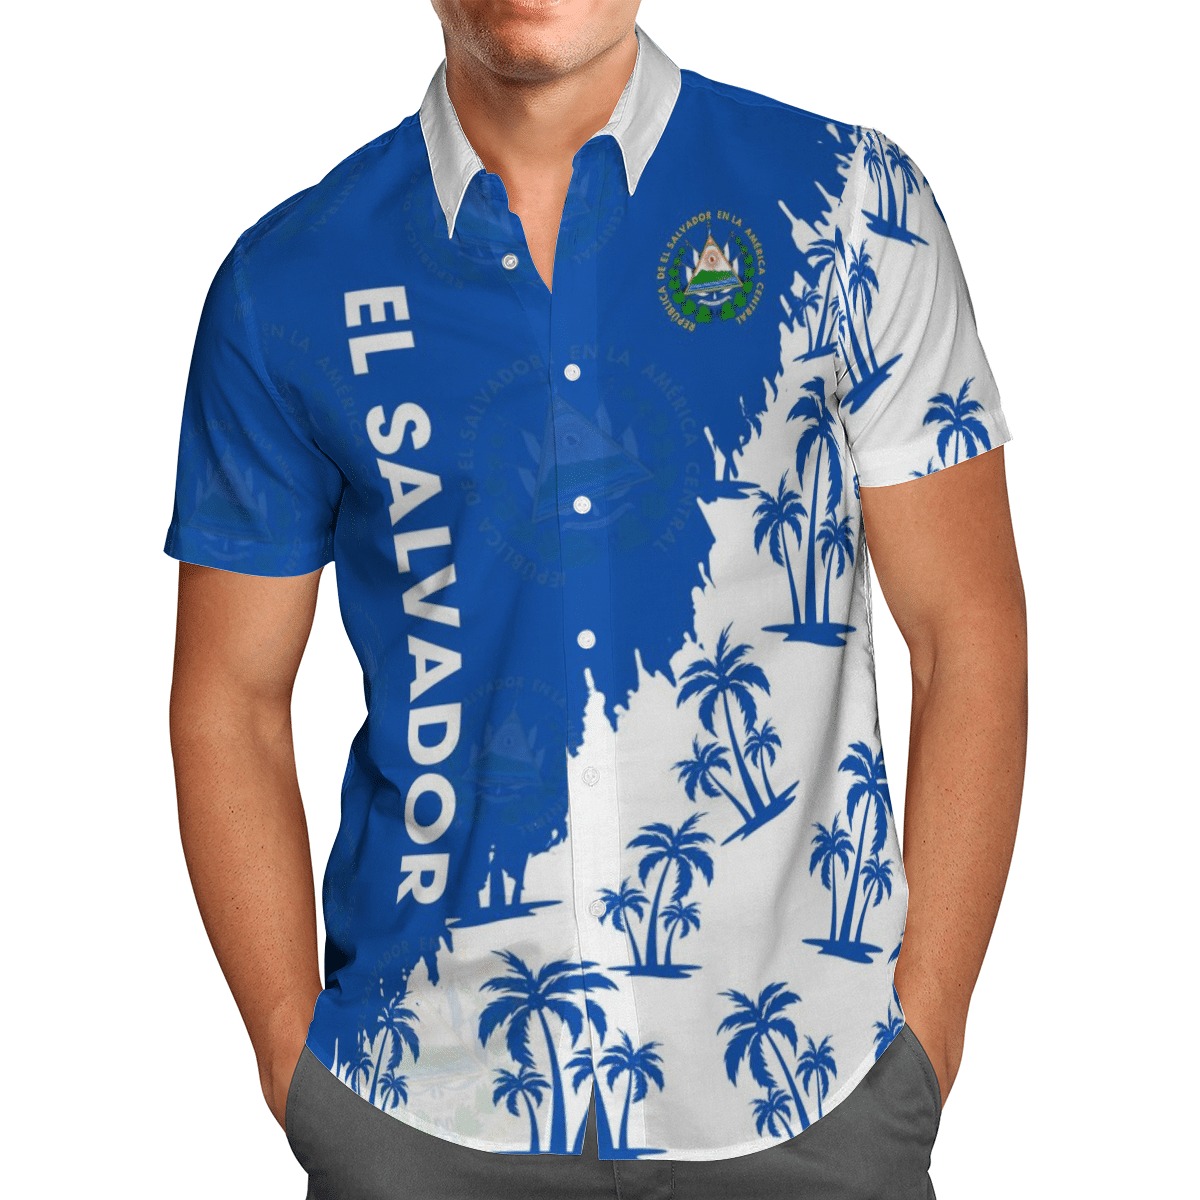 El Salvador Half Blue And White Hawaiian Shirt Set - Meteew